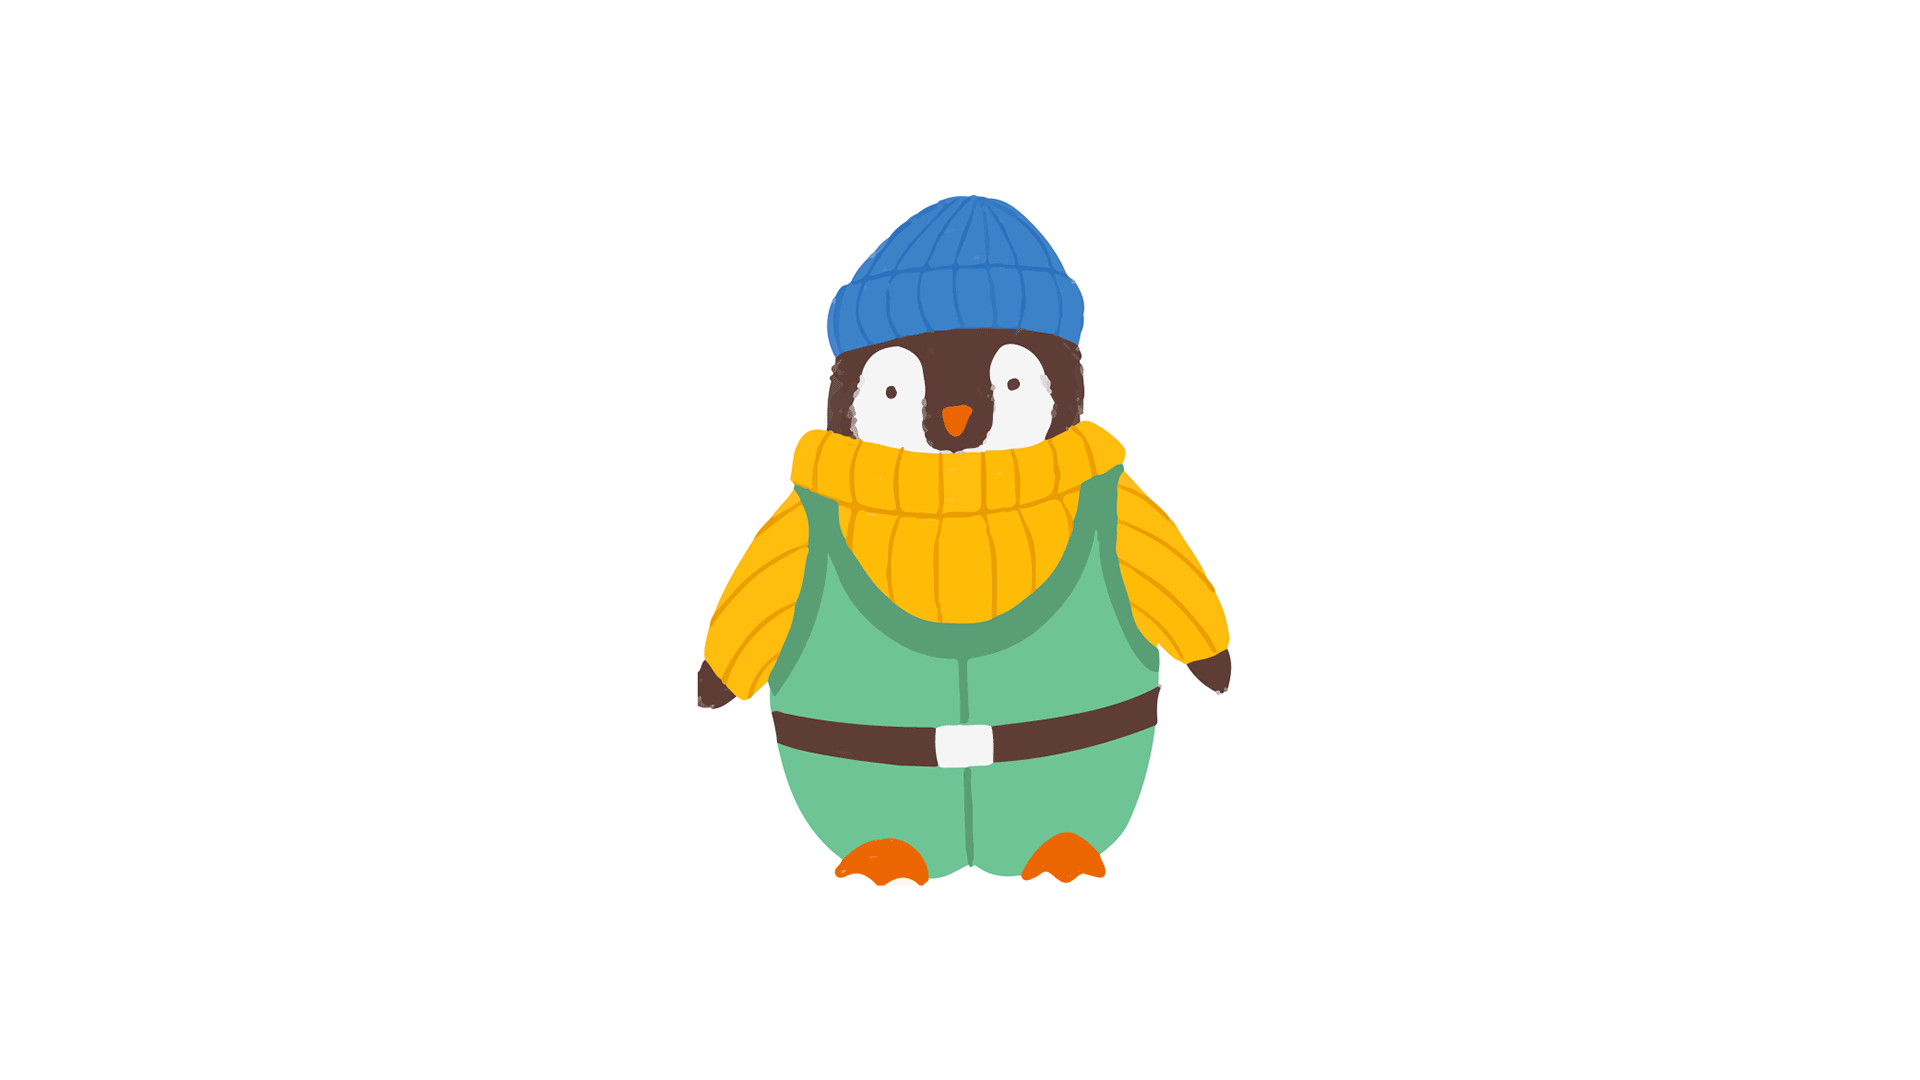 Pengu the Penguin’s Stories